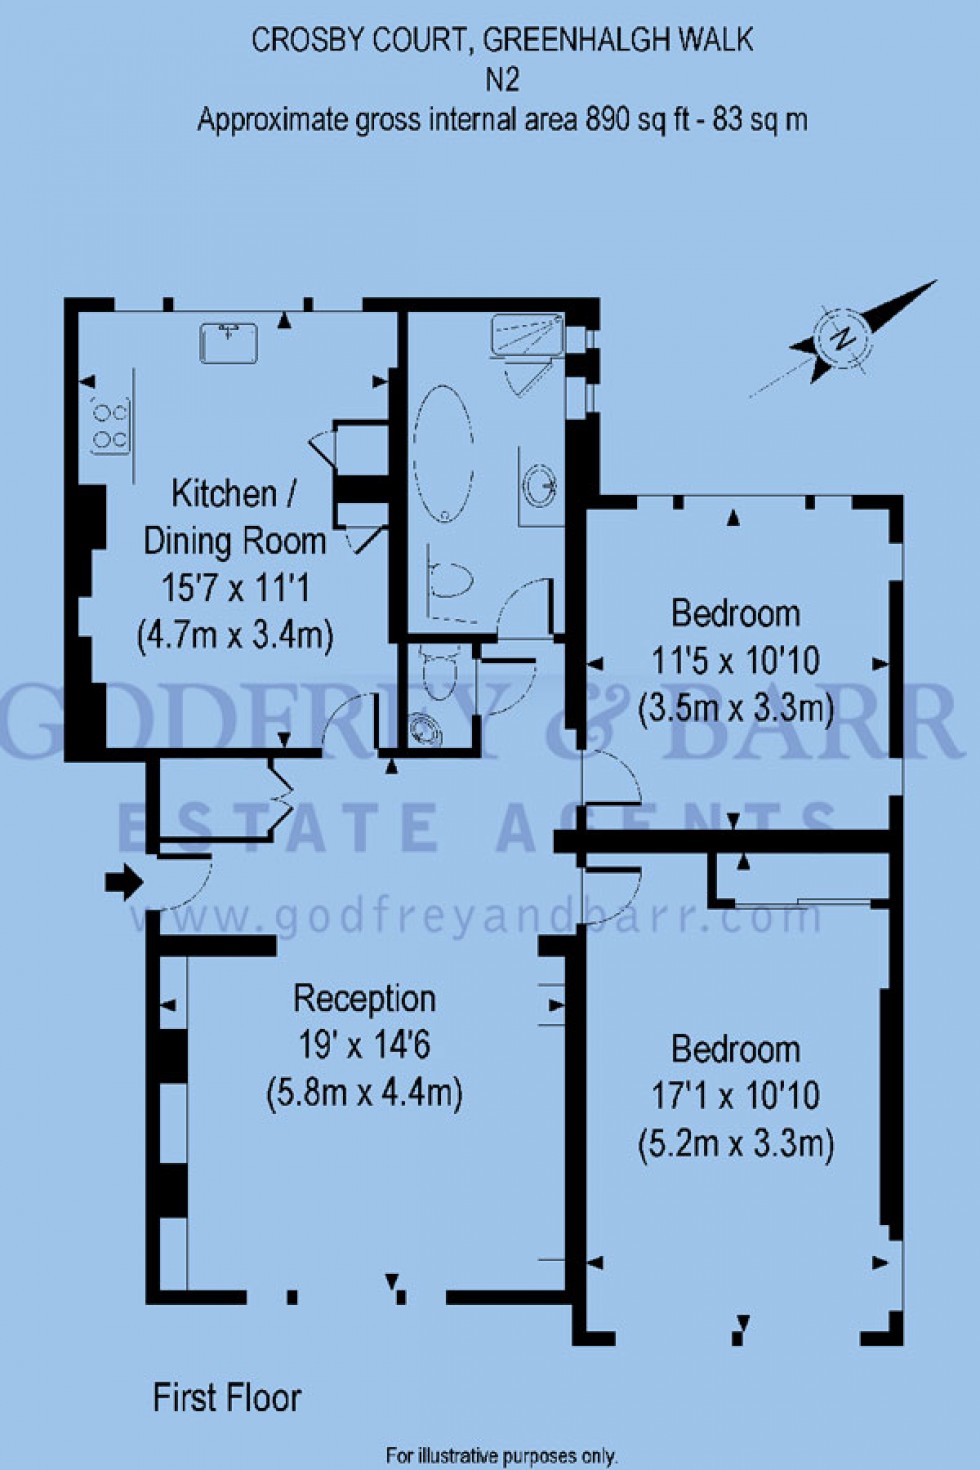 Floorplan for Crosby Court, Greenhalgh Walk, Hampstead Garden Suburb